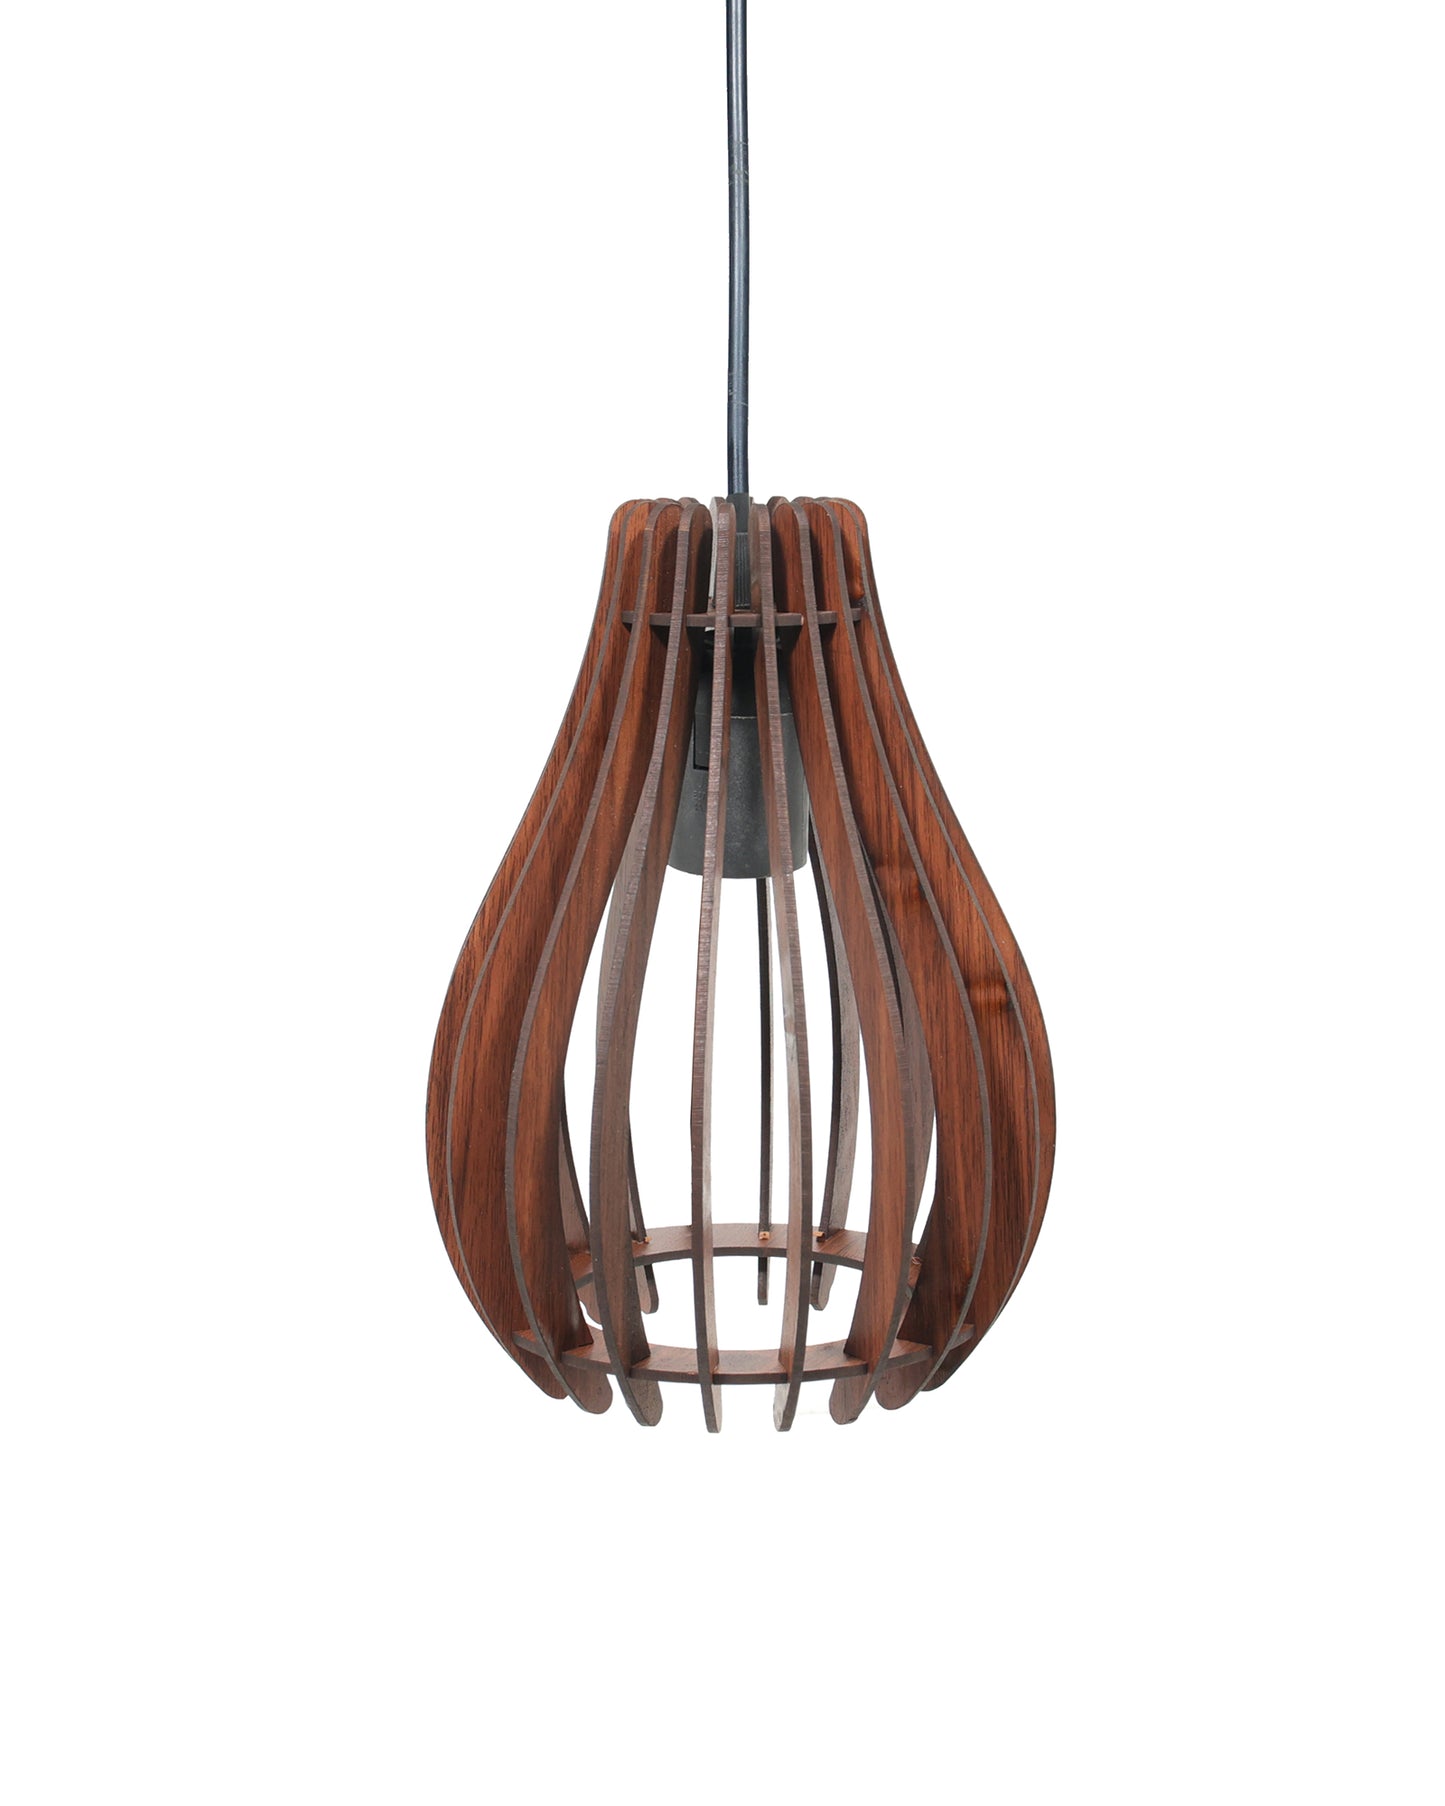 Wood Pendant Light, Mid Century Modern, Handmade, Ceiling Lamp, Chandelier Lighting, Industrial Lamp, Wooden Lamp, Lampshade Ceiling, Oval